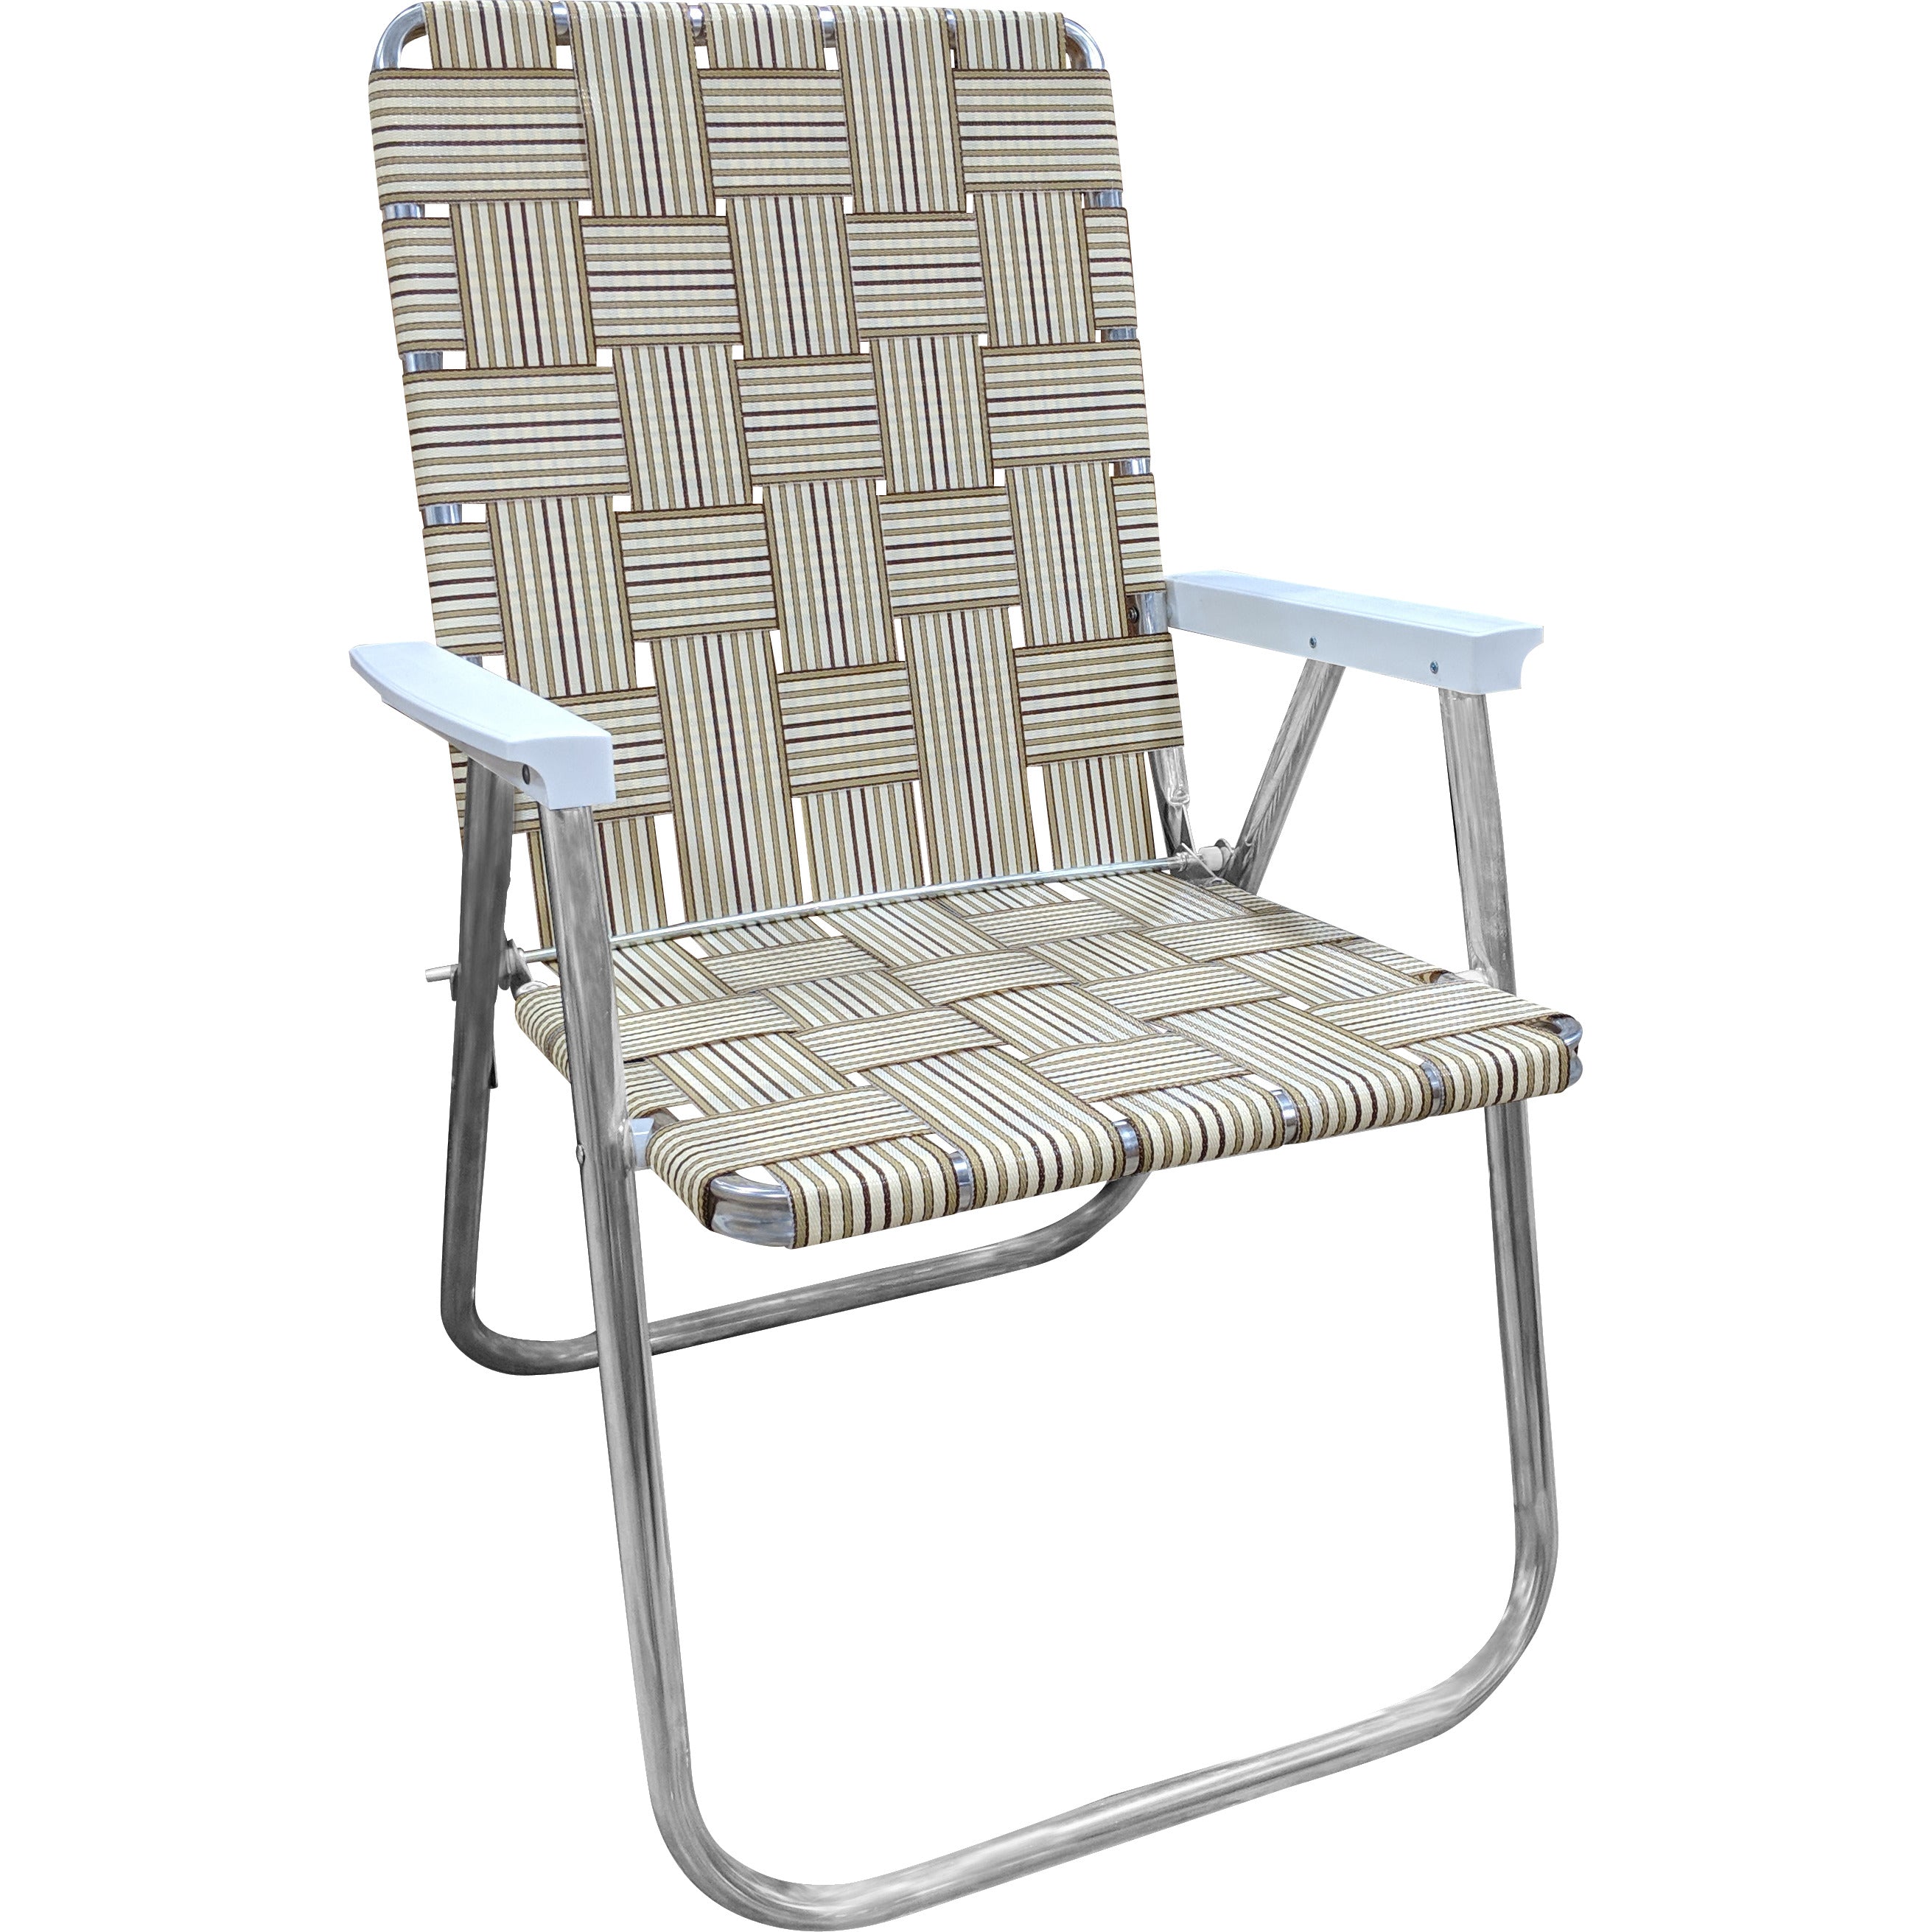 aluminum folding lawn chairs